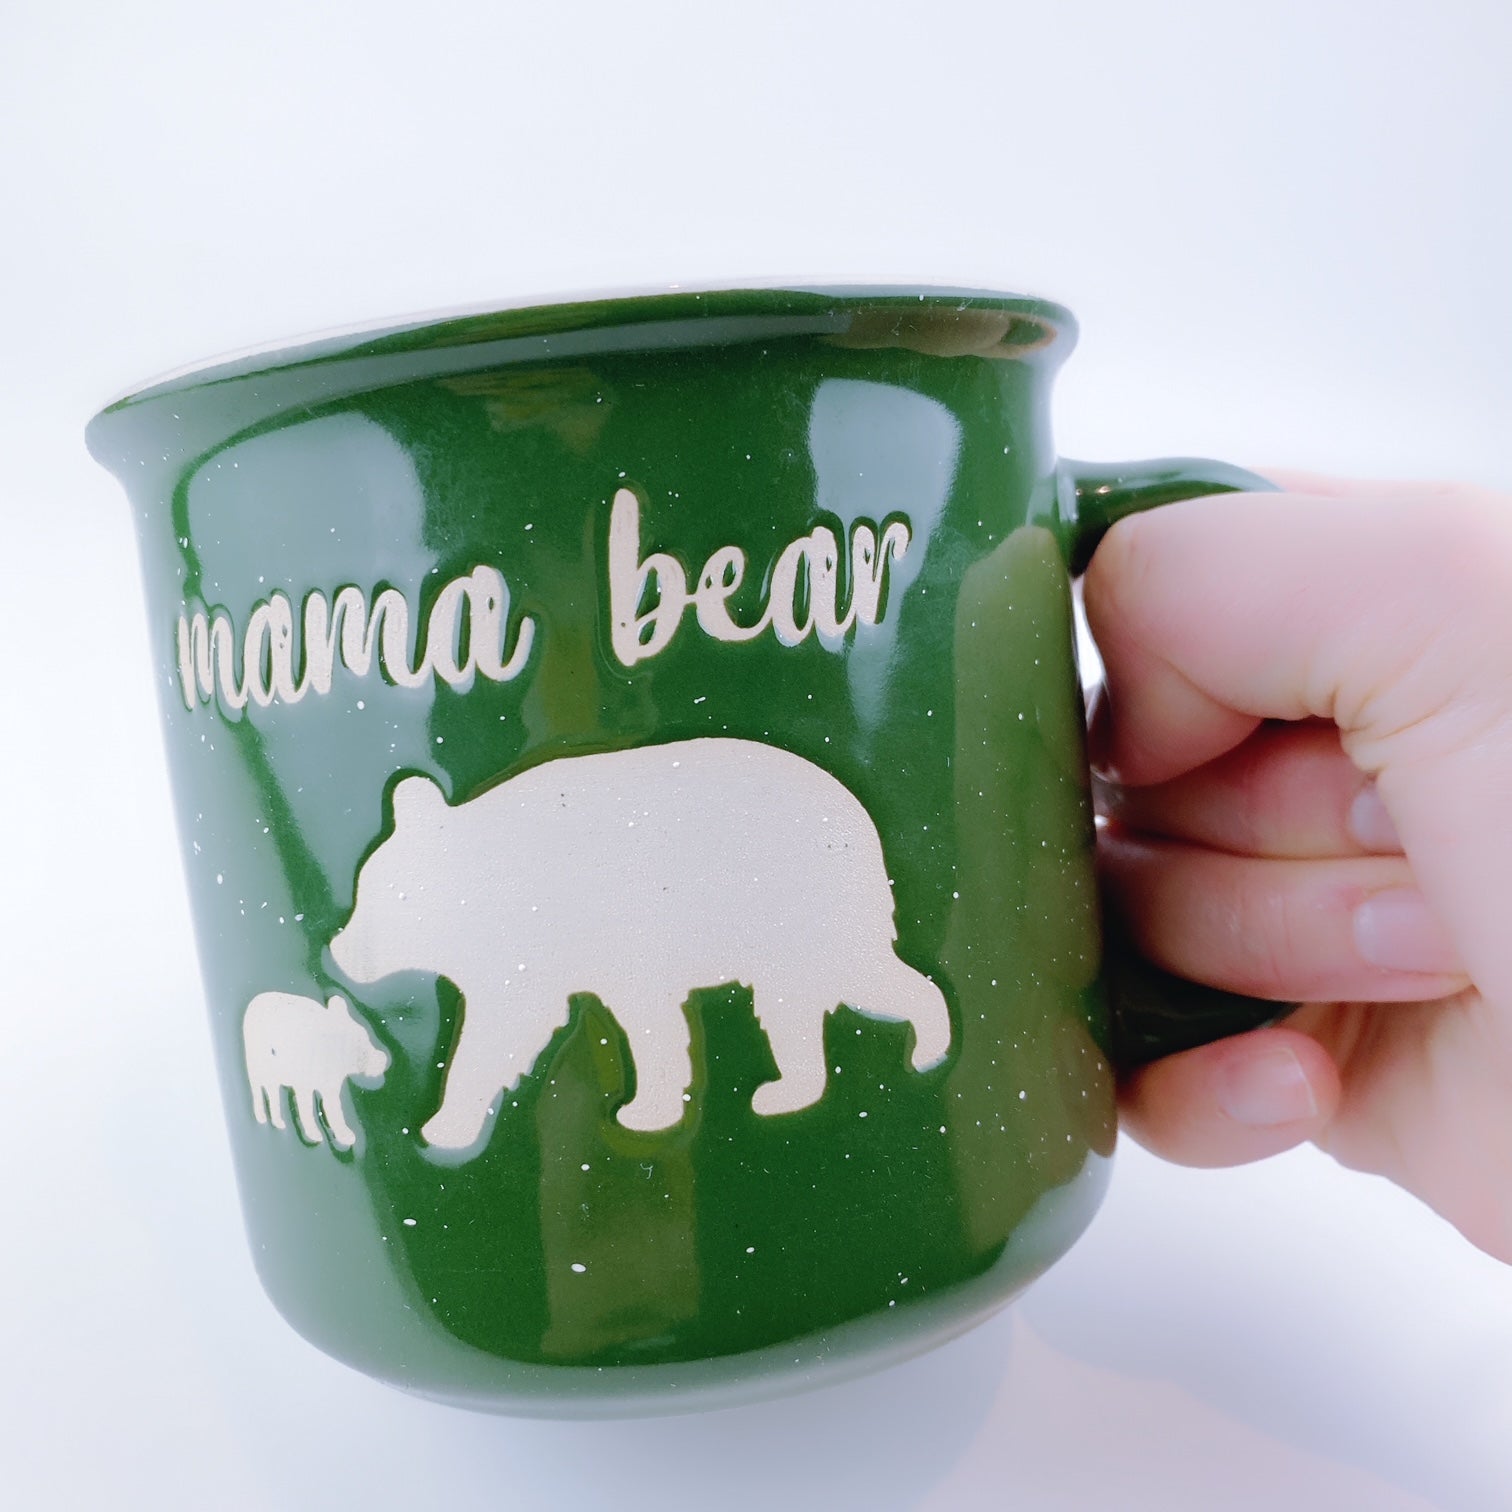 Mama bear / papa bear mug set of 2